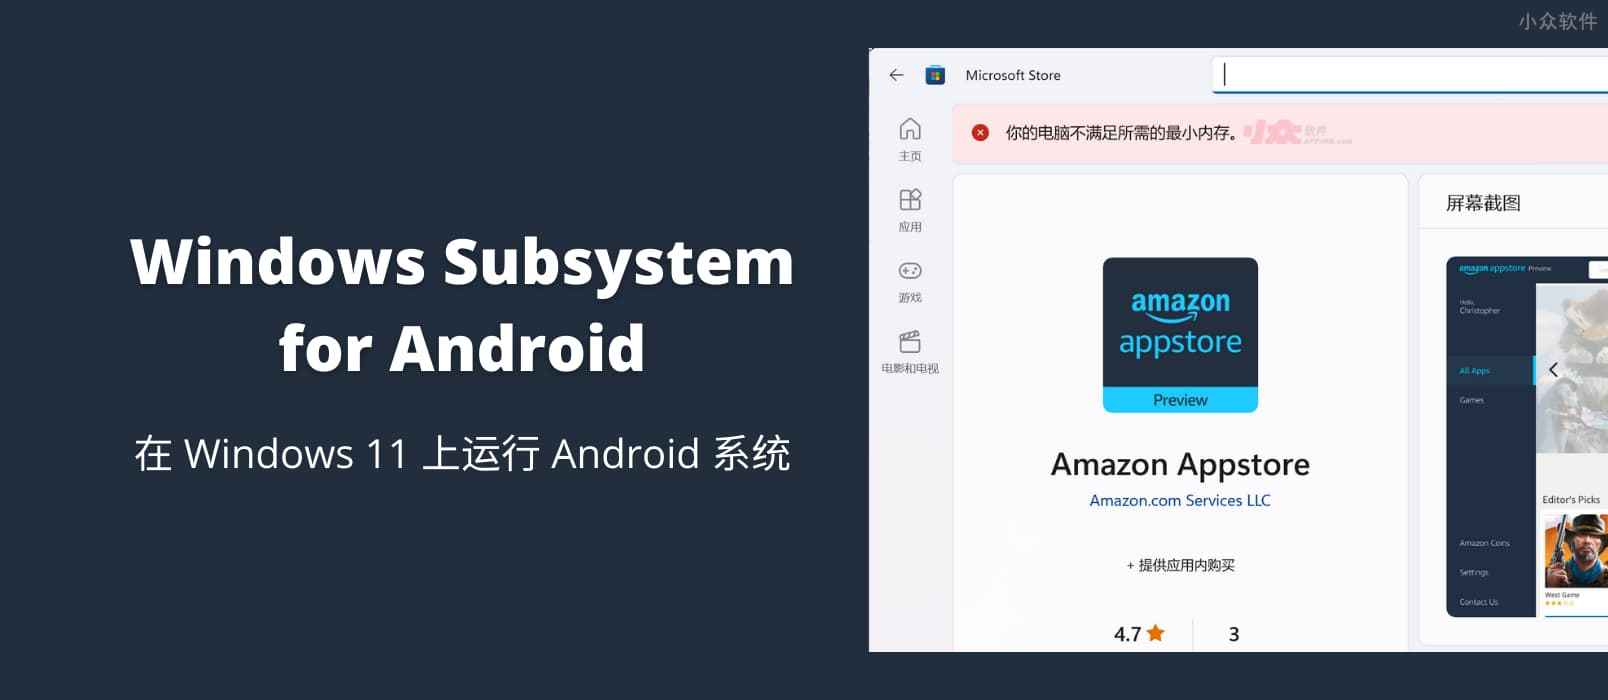 Windows Subsystem for Android 下载地址，在 Windows 11 上运行 Android 系统